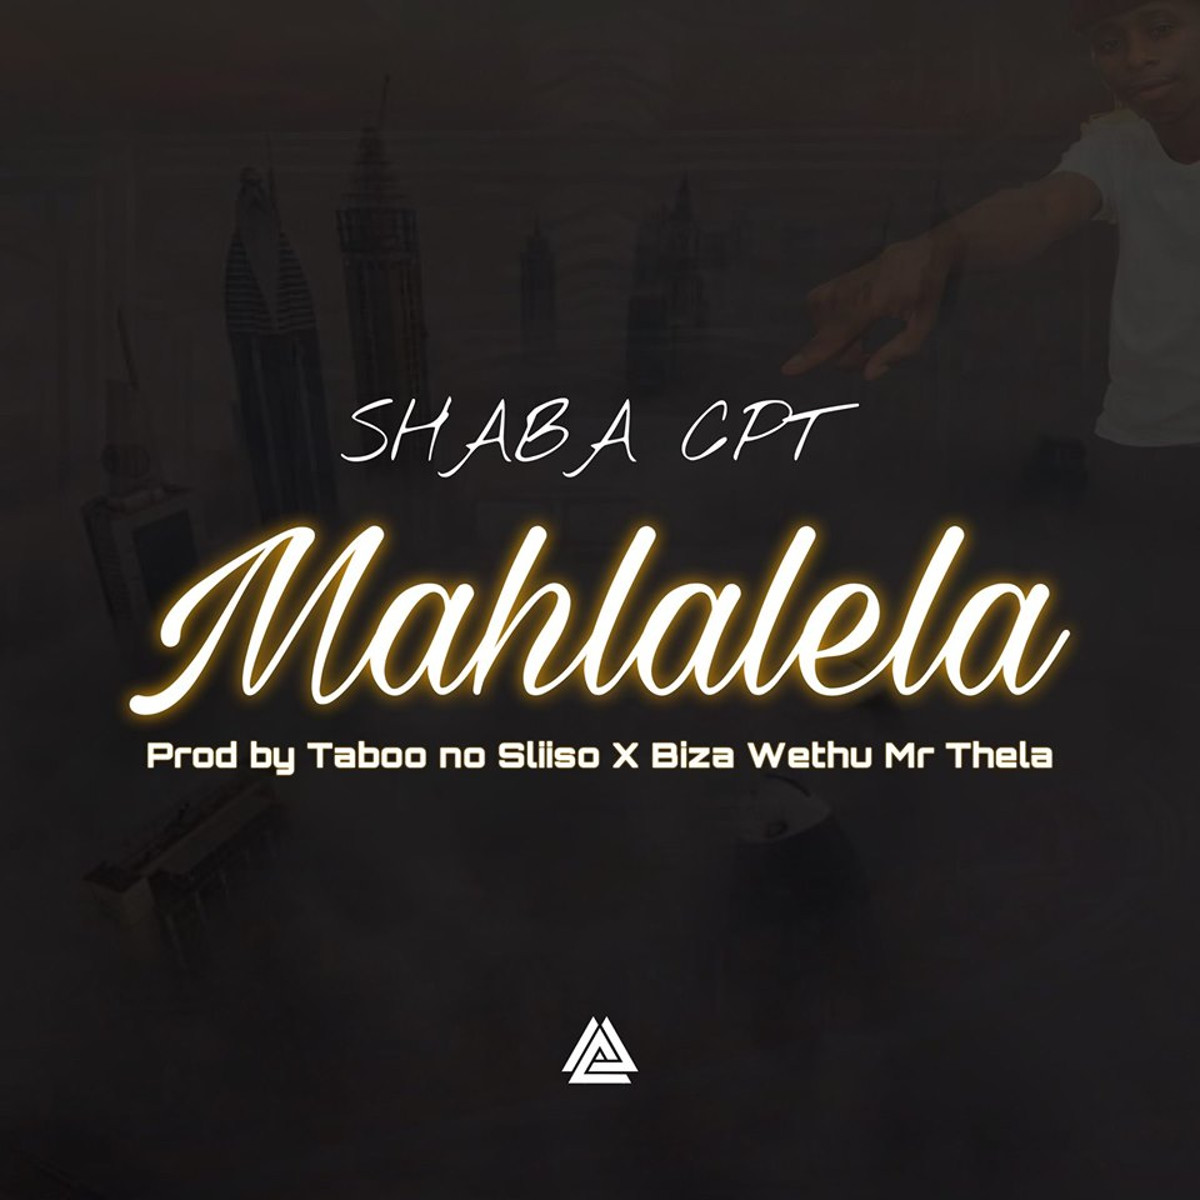 Shaba Cpt Ft. Taboo no Sliiso x Biza Wethu & Mr Thela - Mahlalela, new gqom music, latest gqom songs, sa gqom music download mp3, south africa house music